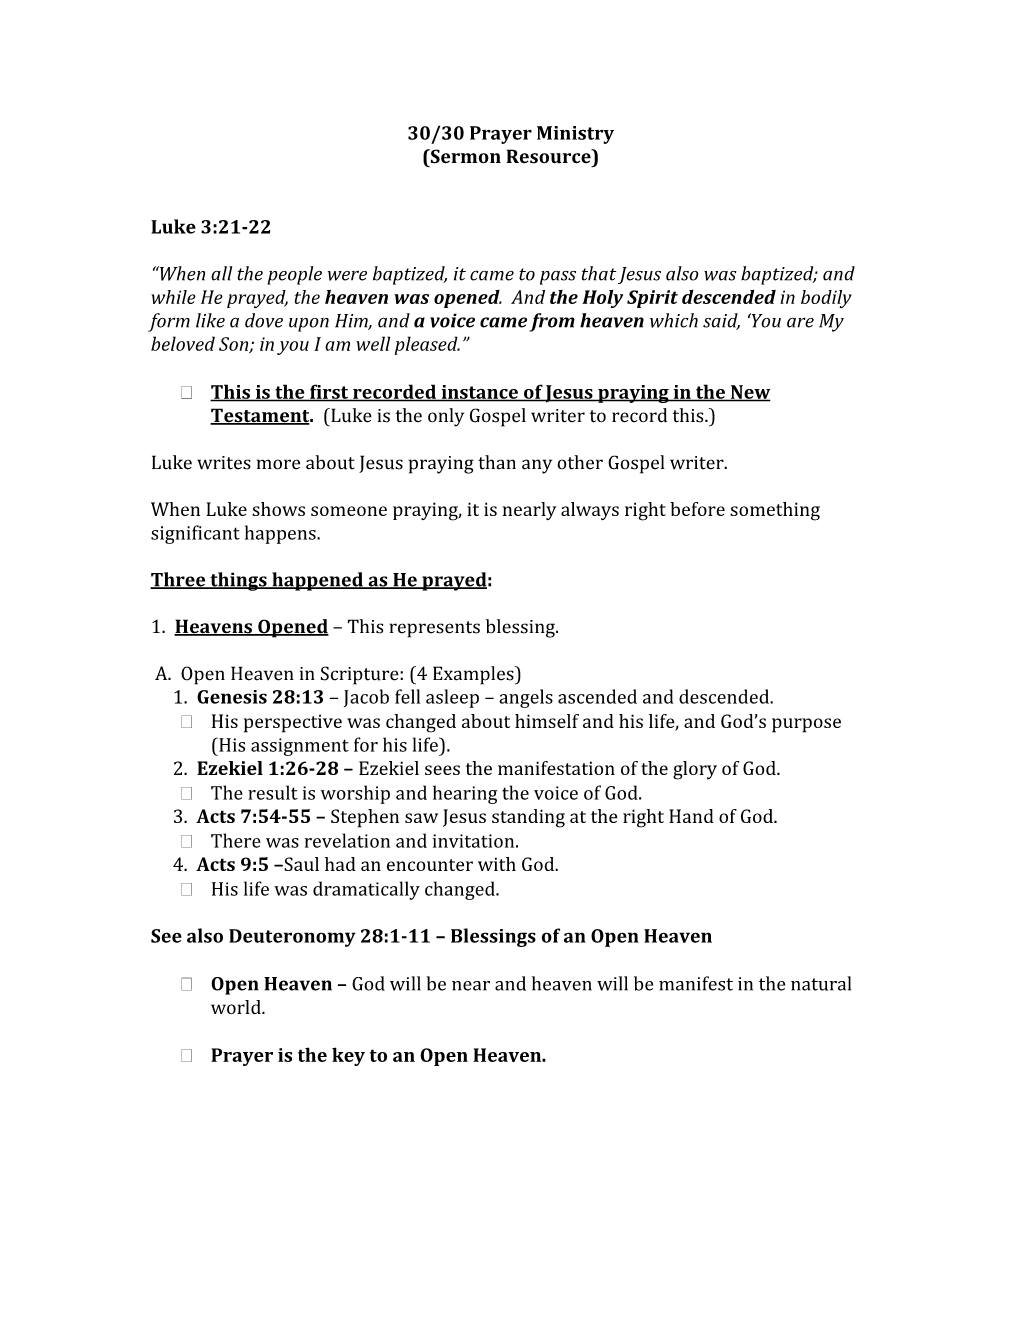 30/30 Prayer Ministry (Sermon Resource) Luke 3:21-22 “When All